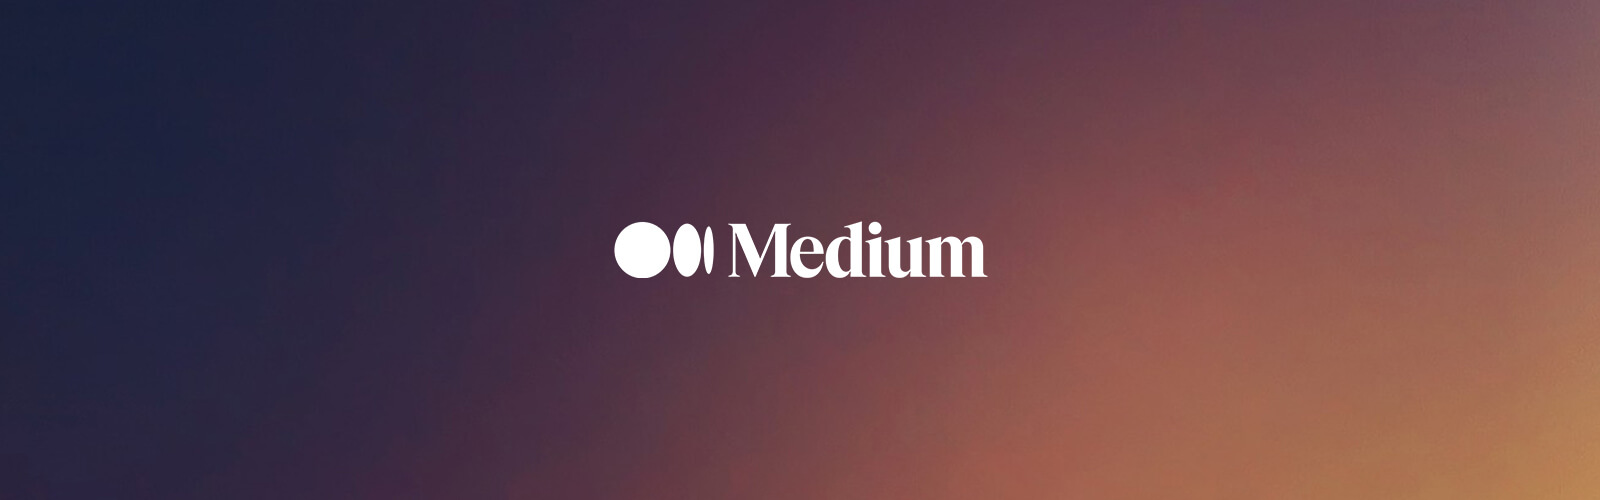 Image of Medium logo